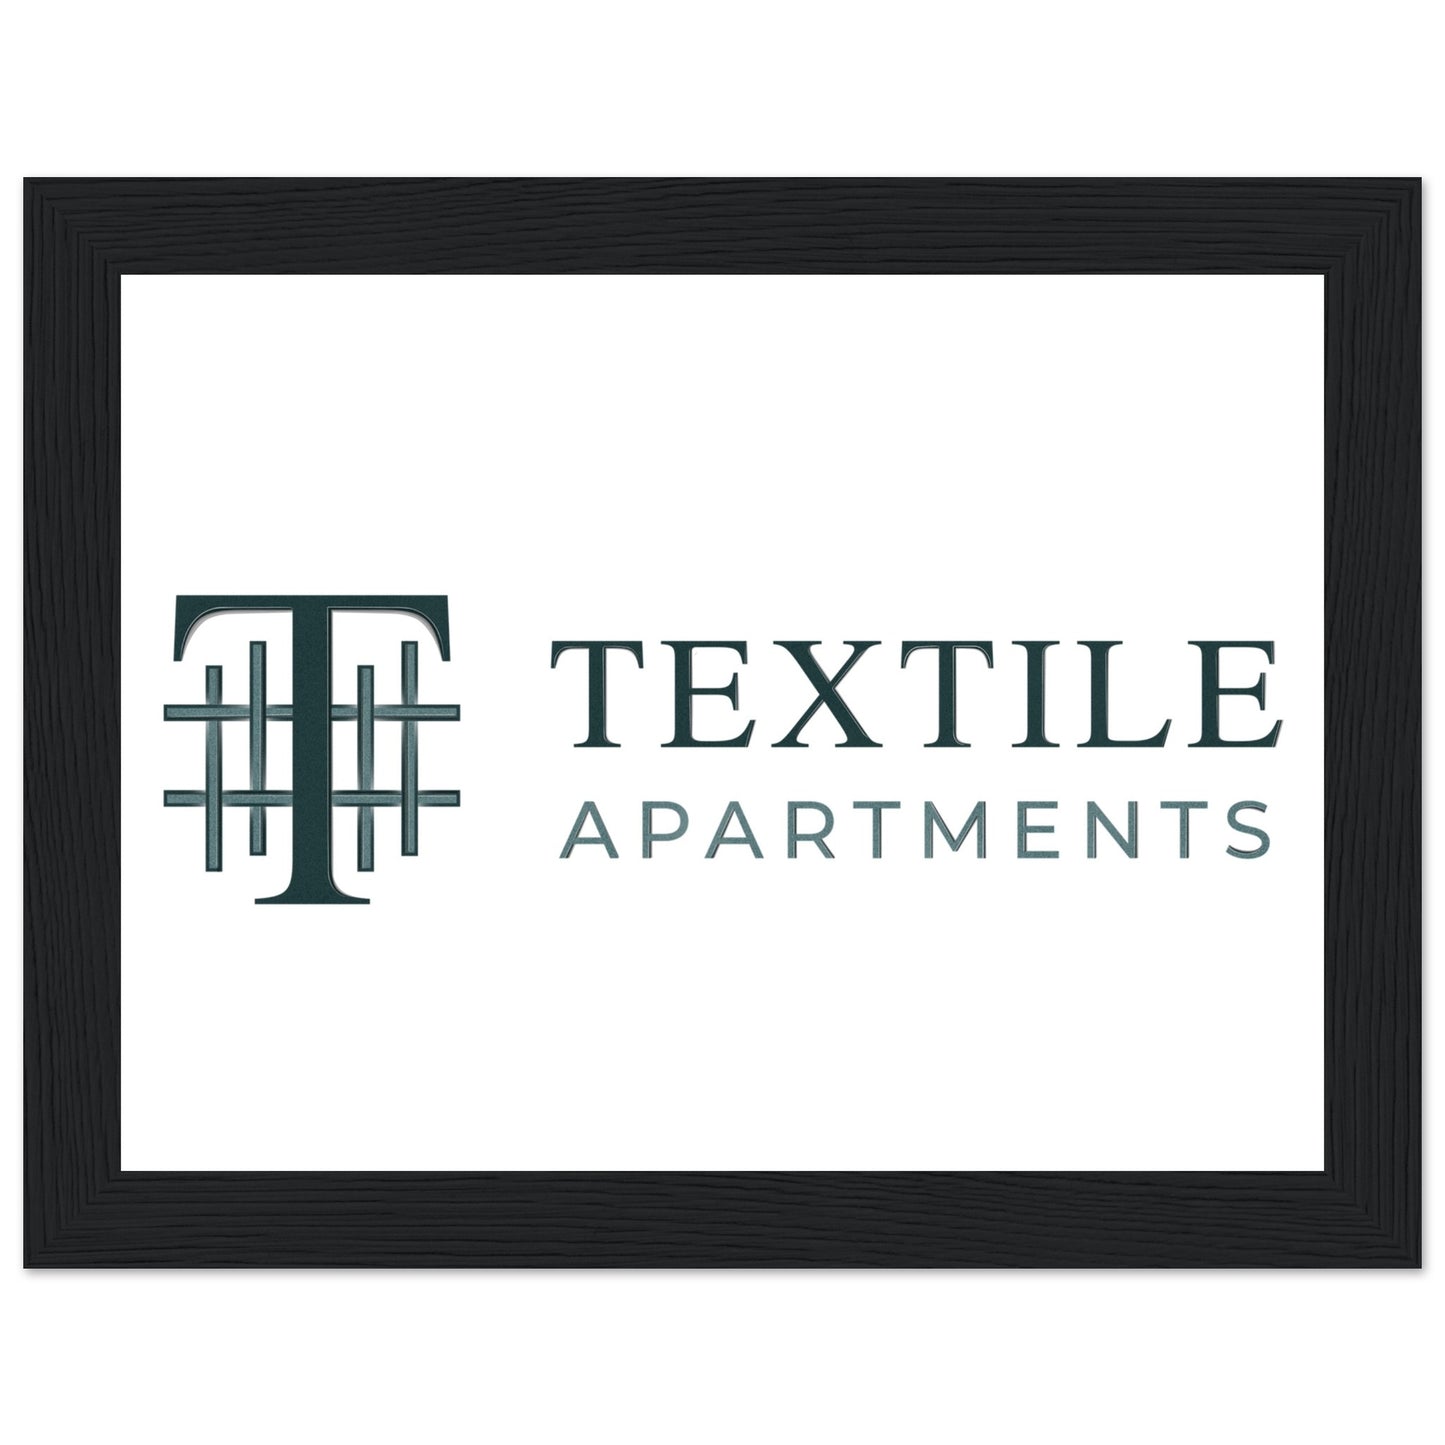 Textile Apartments - Premium Matte Paper Wooden Framed Poster